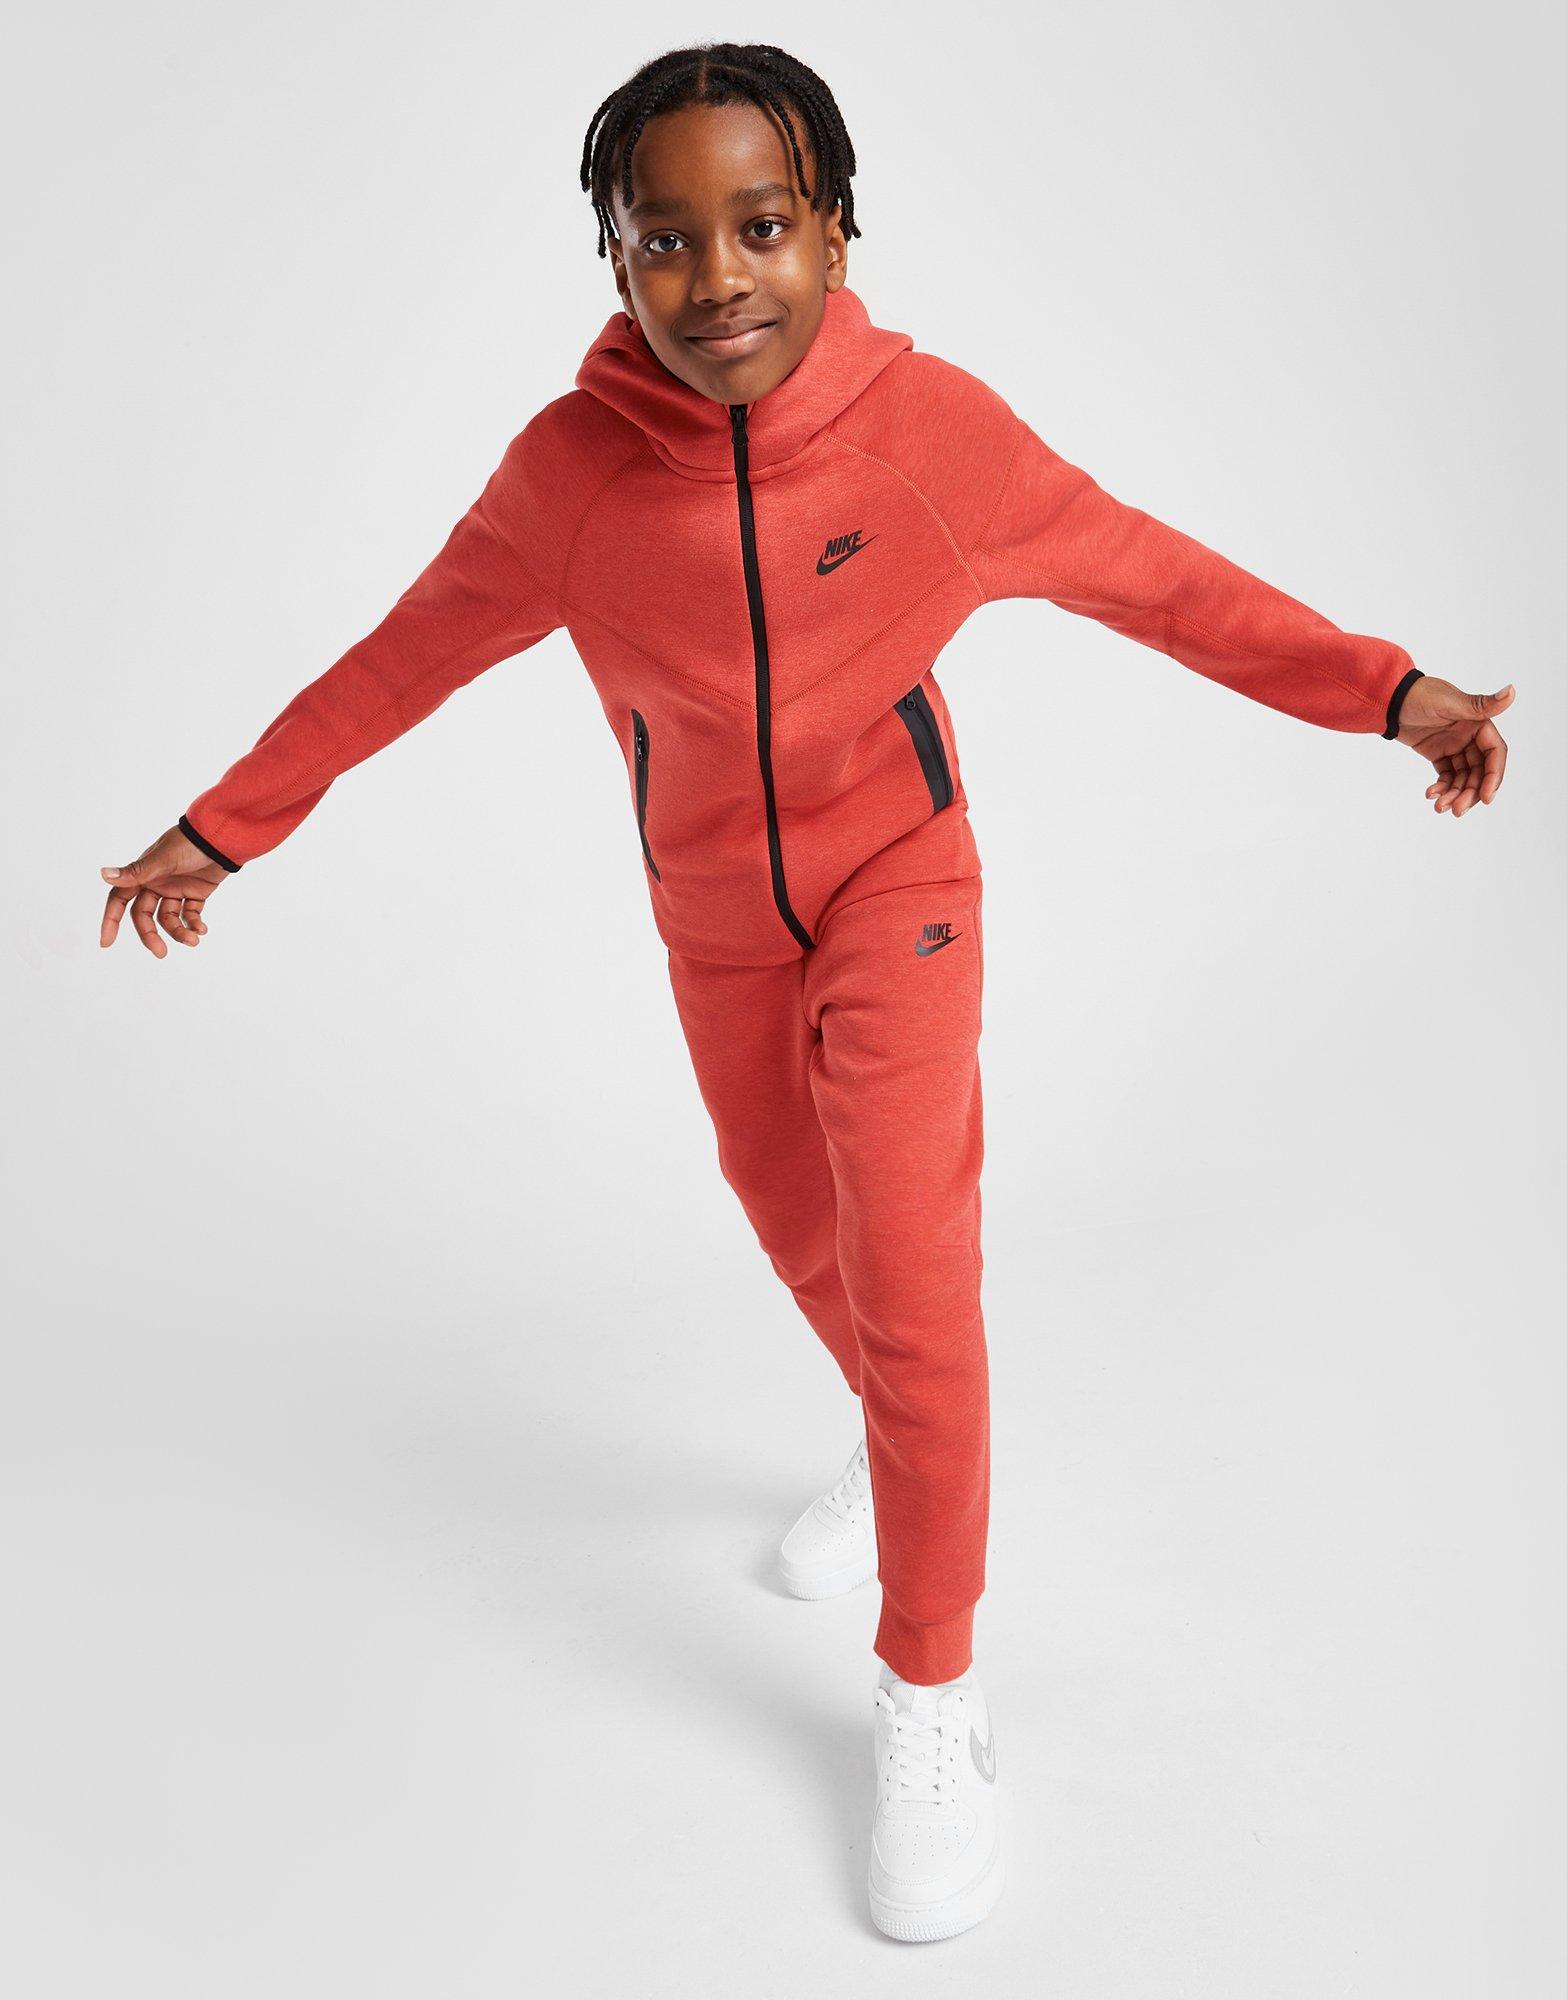 Black Nike Tech Fleece Hoodie Junior